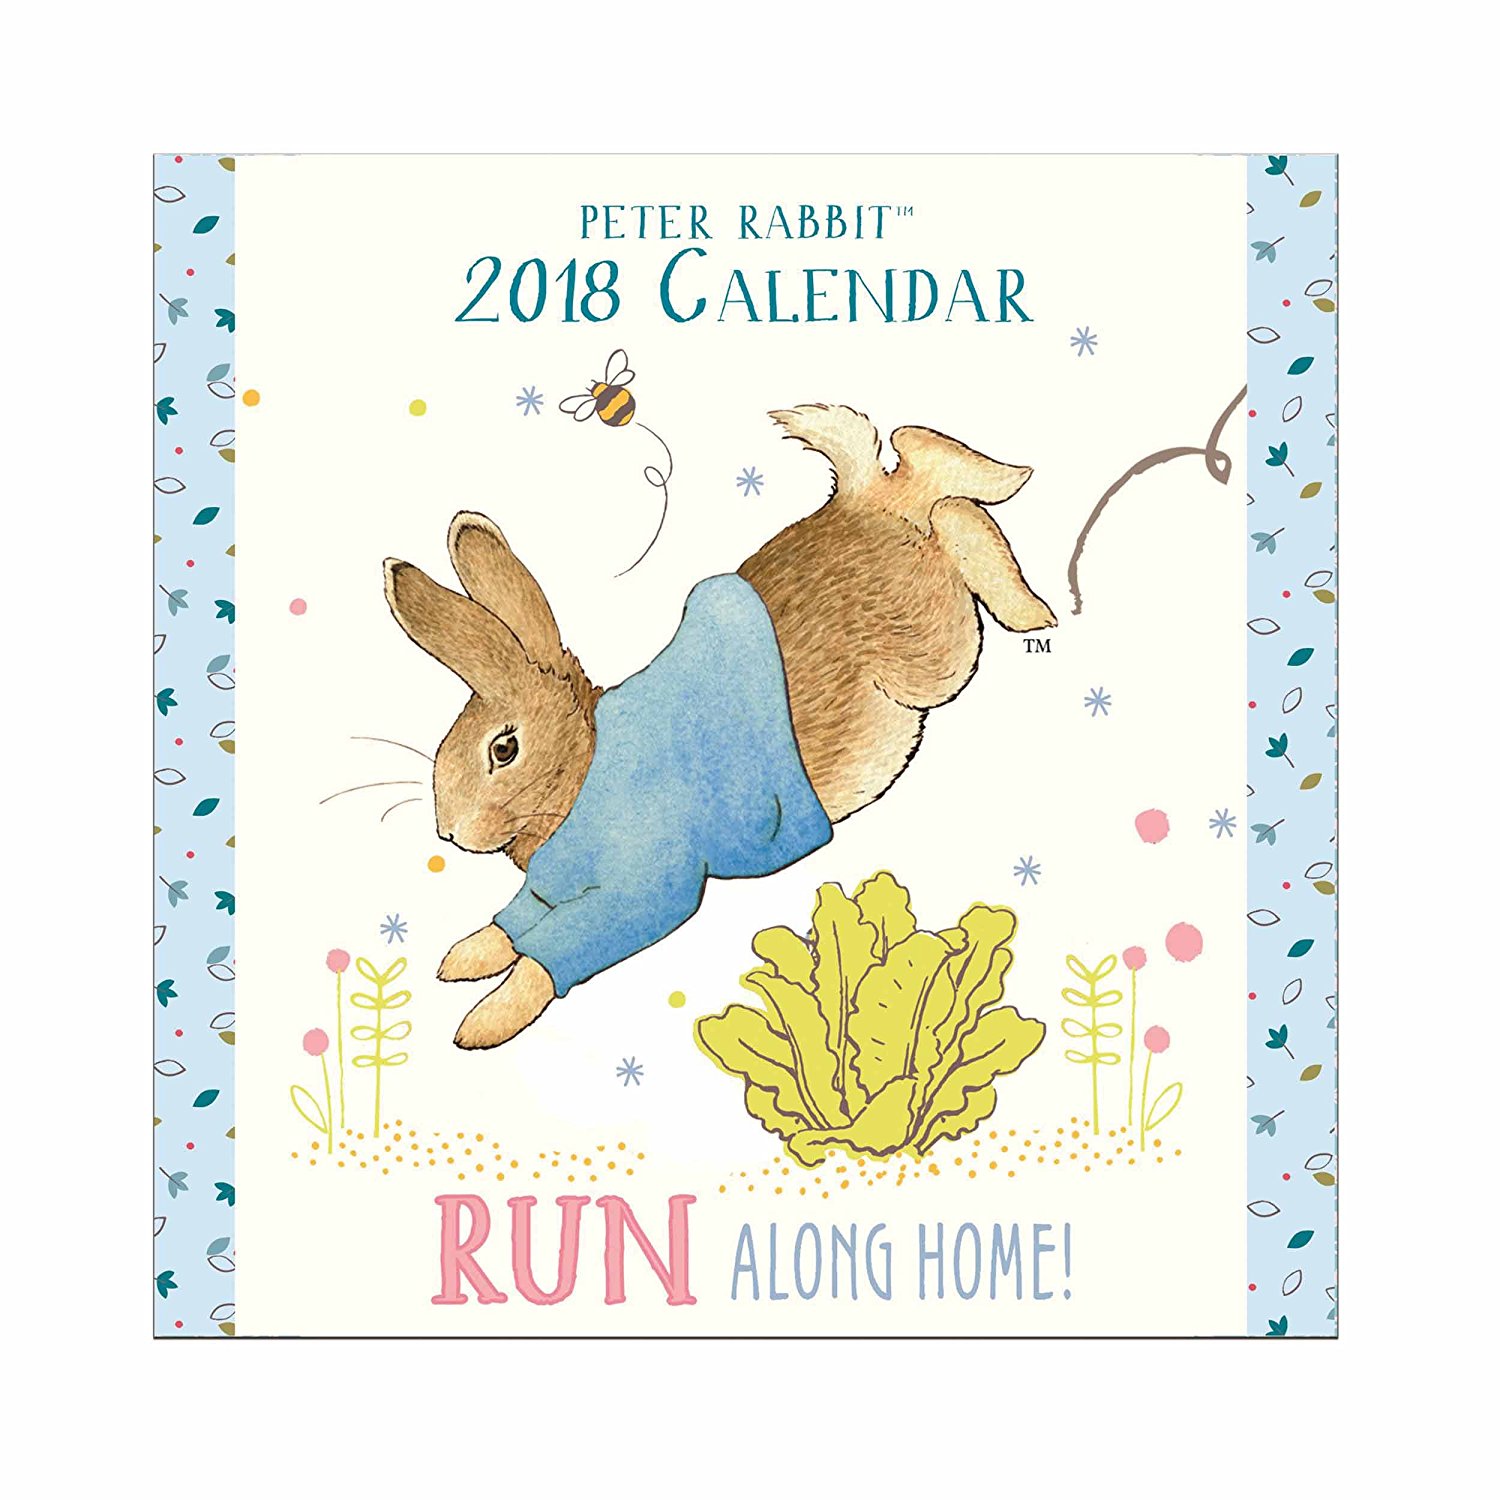 Beatrix Potter Square Calendar 2018 Just for Ewe